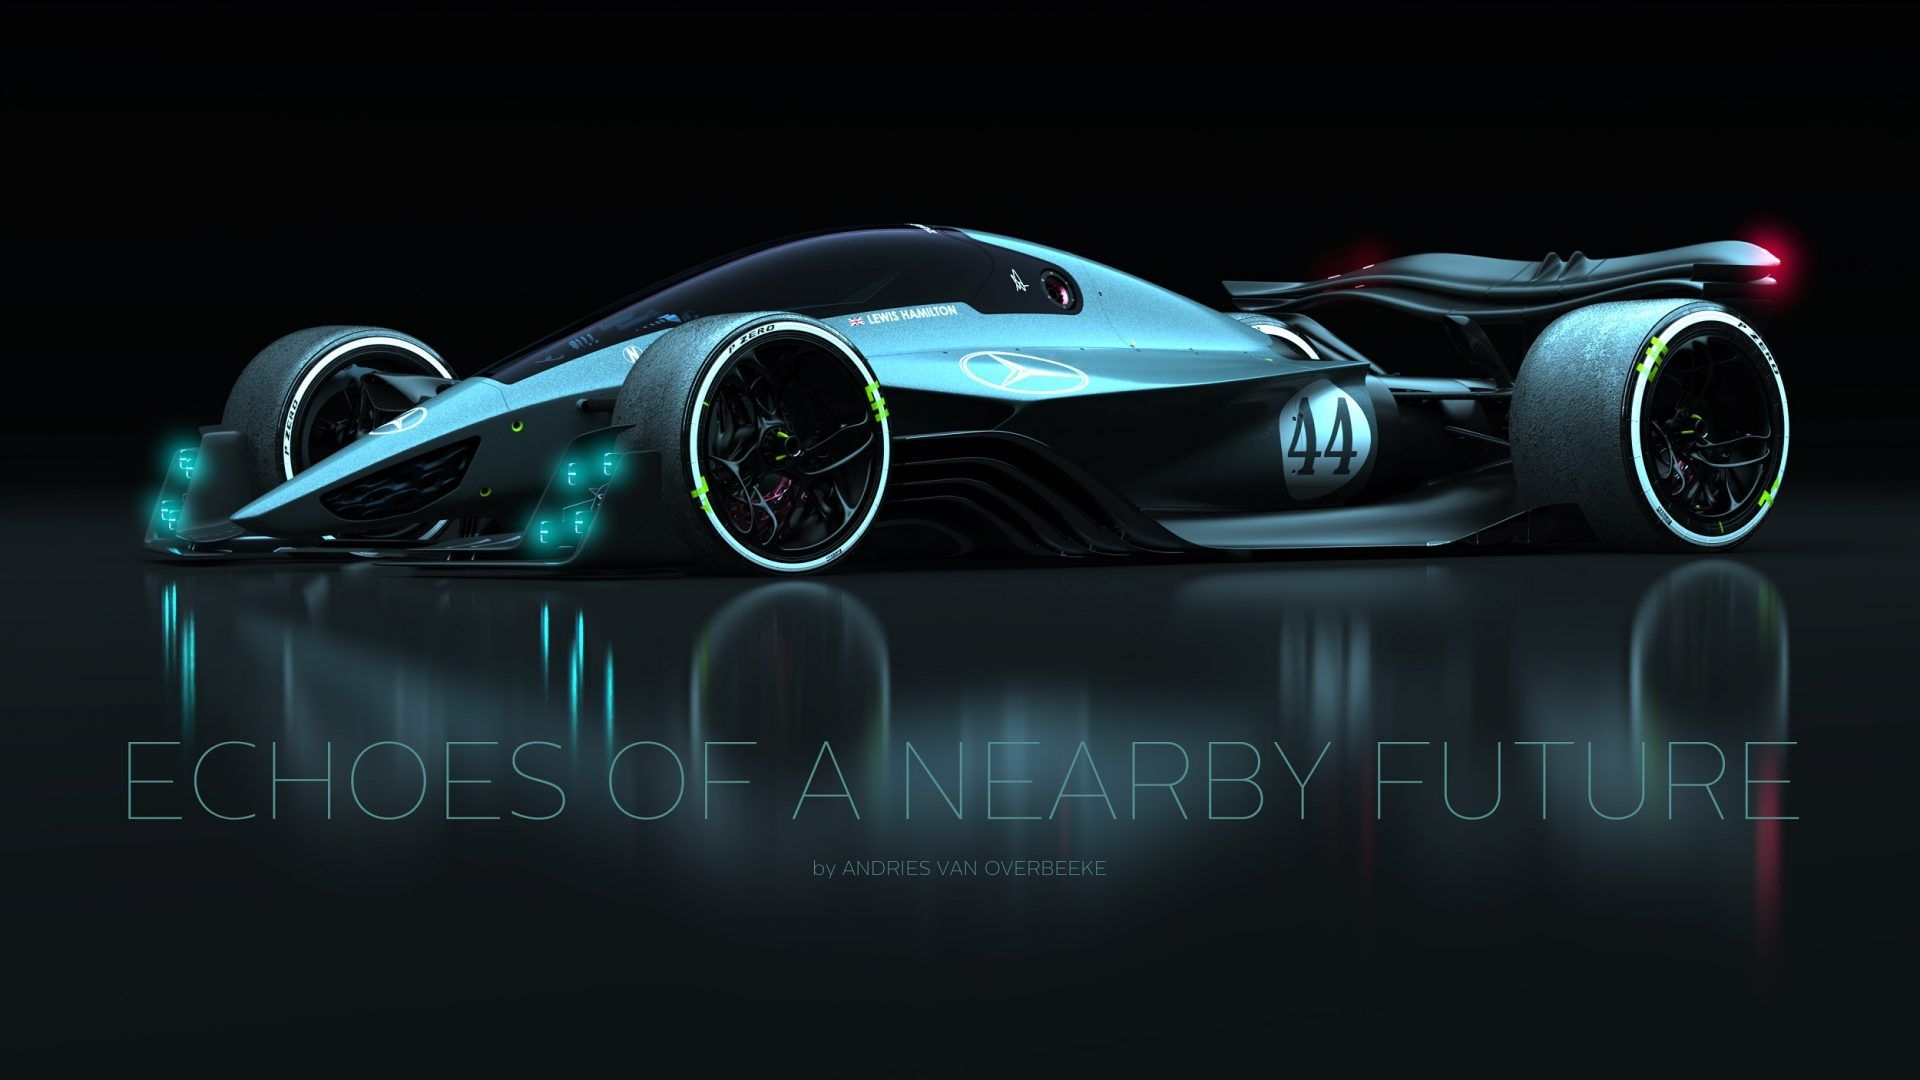 Futuristic Lewis Hamilton F1 Car Rendering Shows Future Of Racing